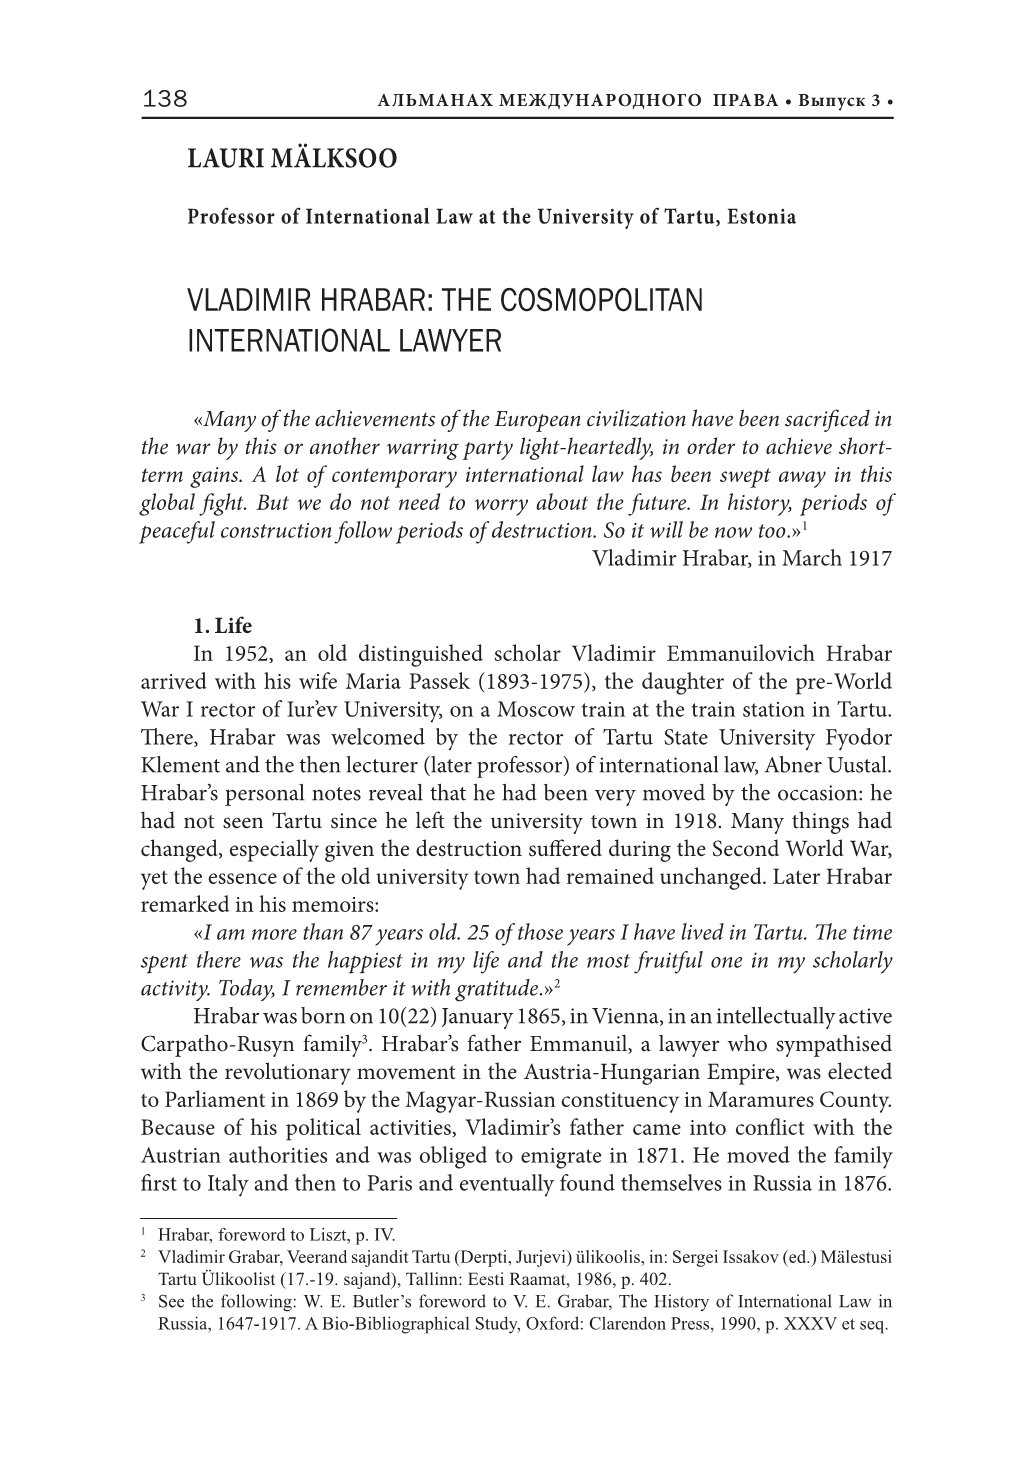 Vladimir Hrabar: the Cosmopolitan International Lawyer